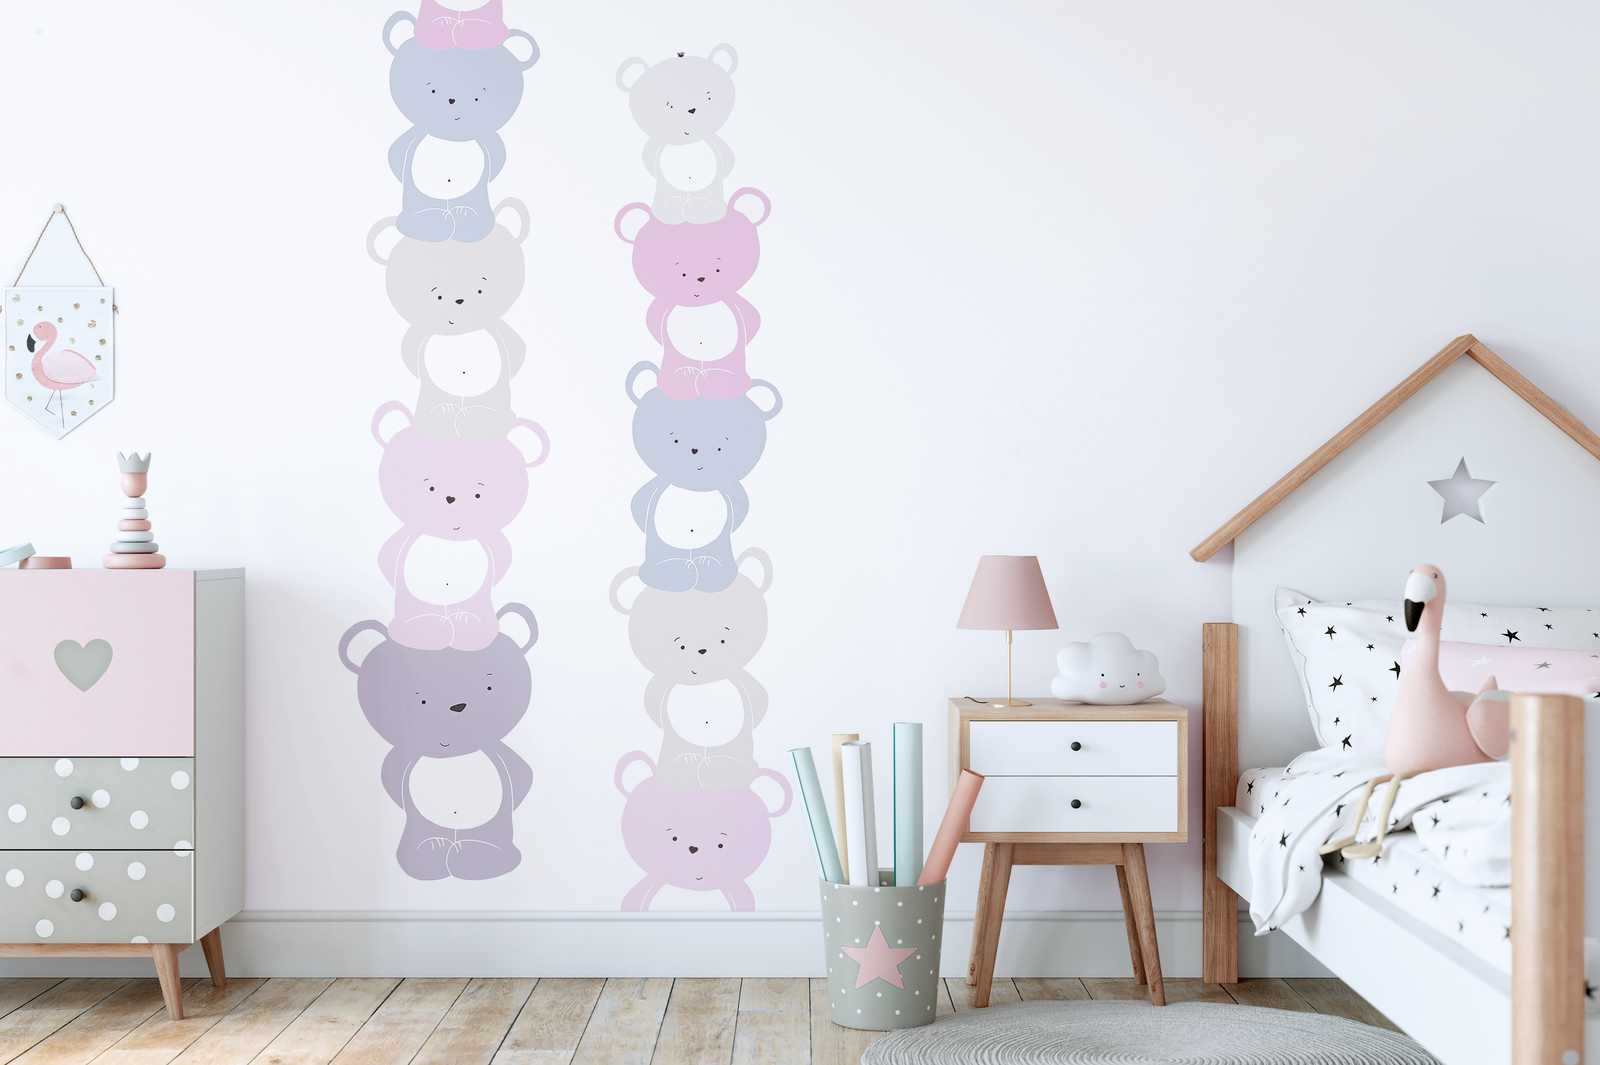             Girls room wallpaper bears pattern - pink, grey , white
        